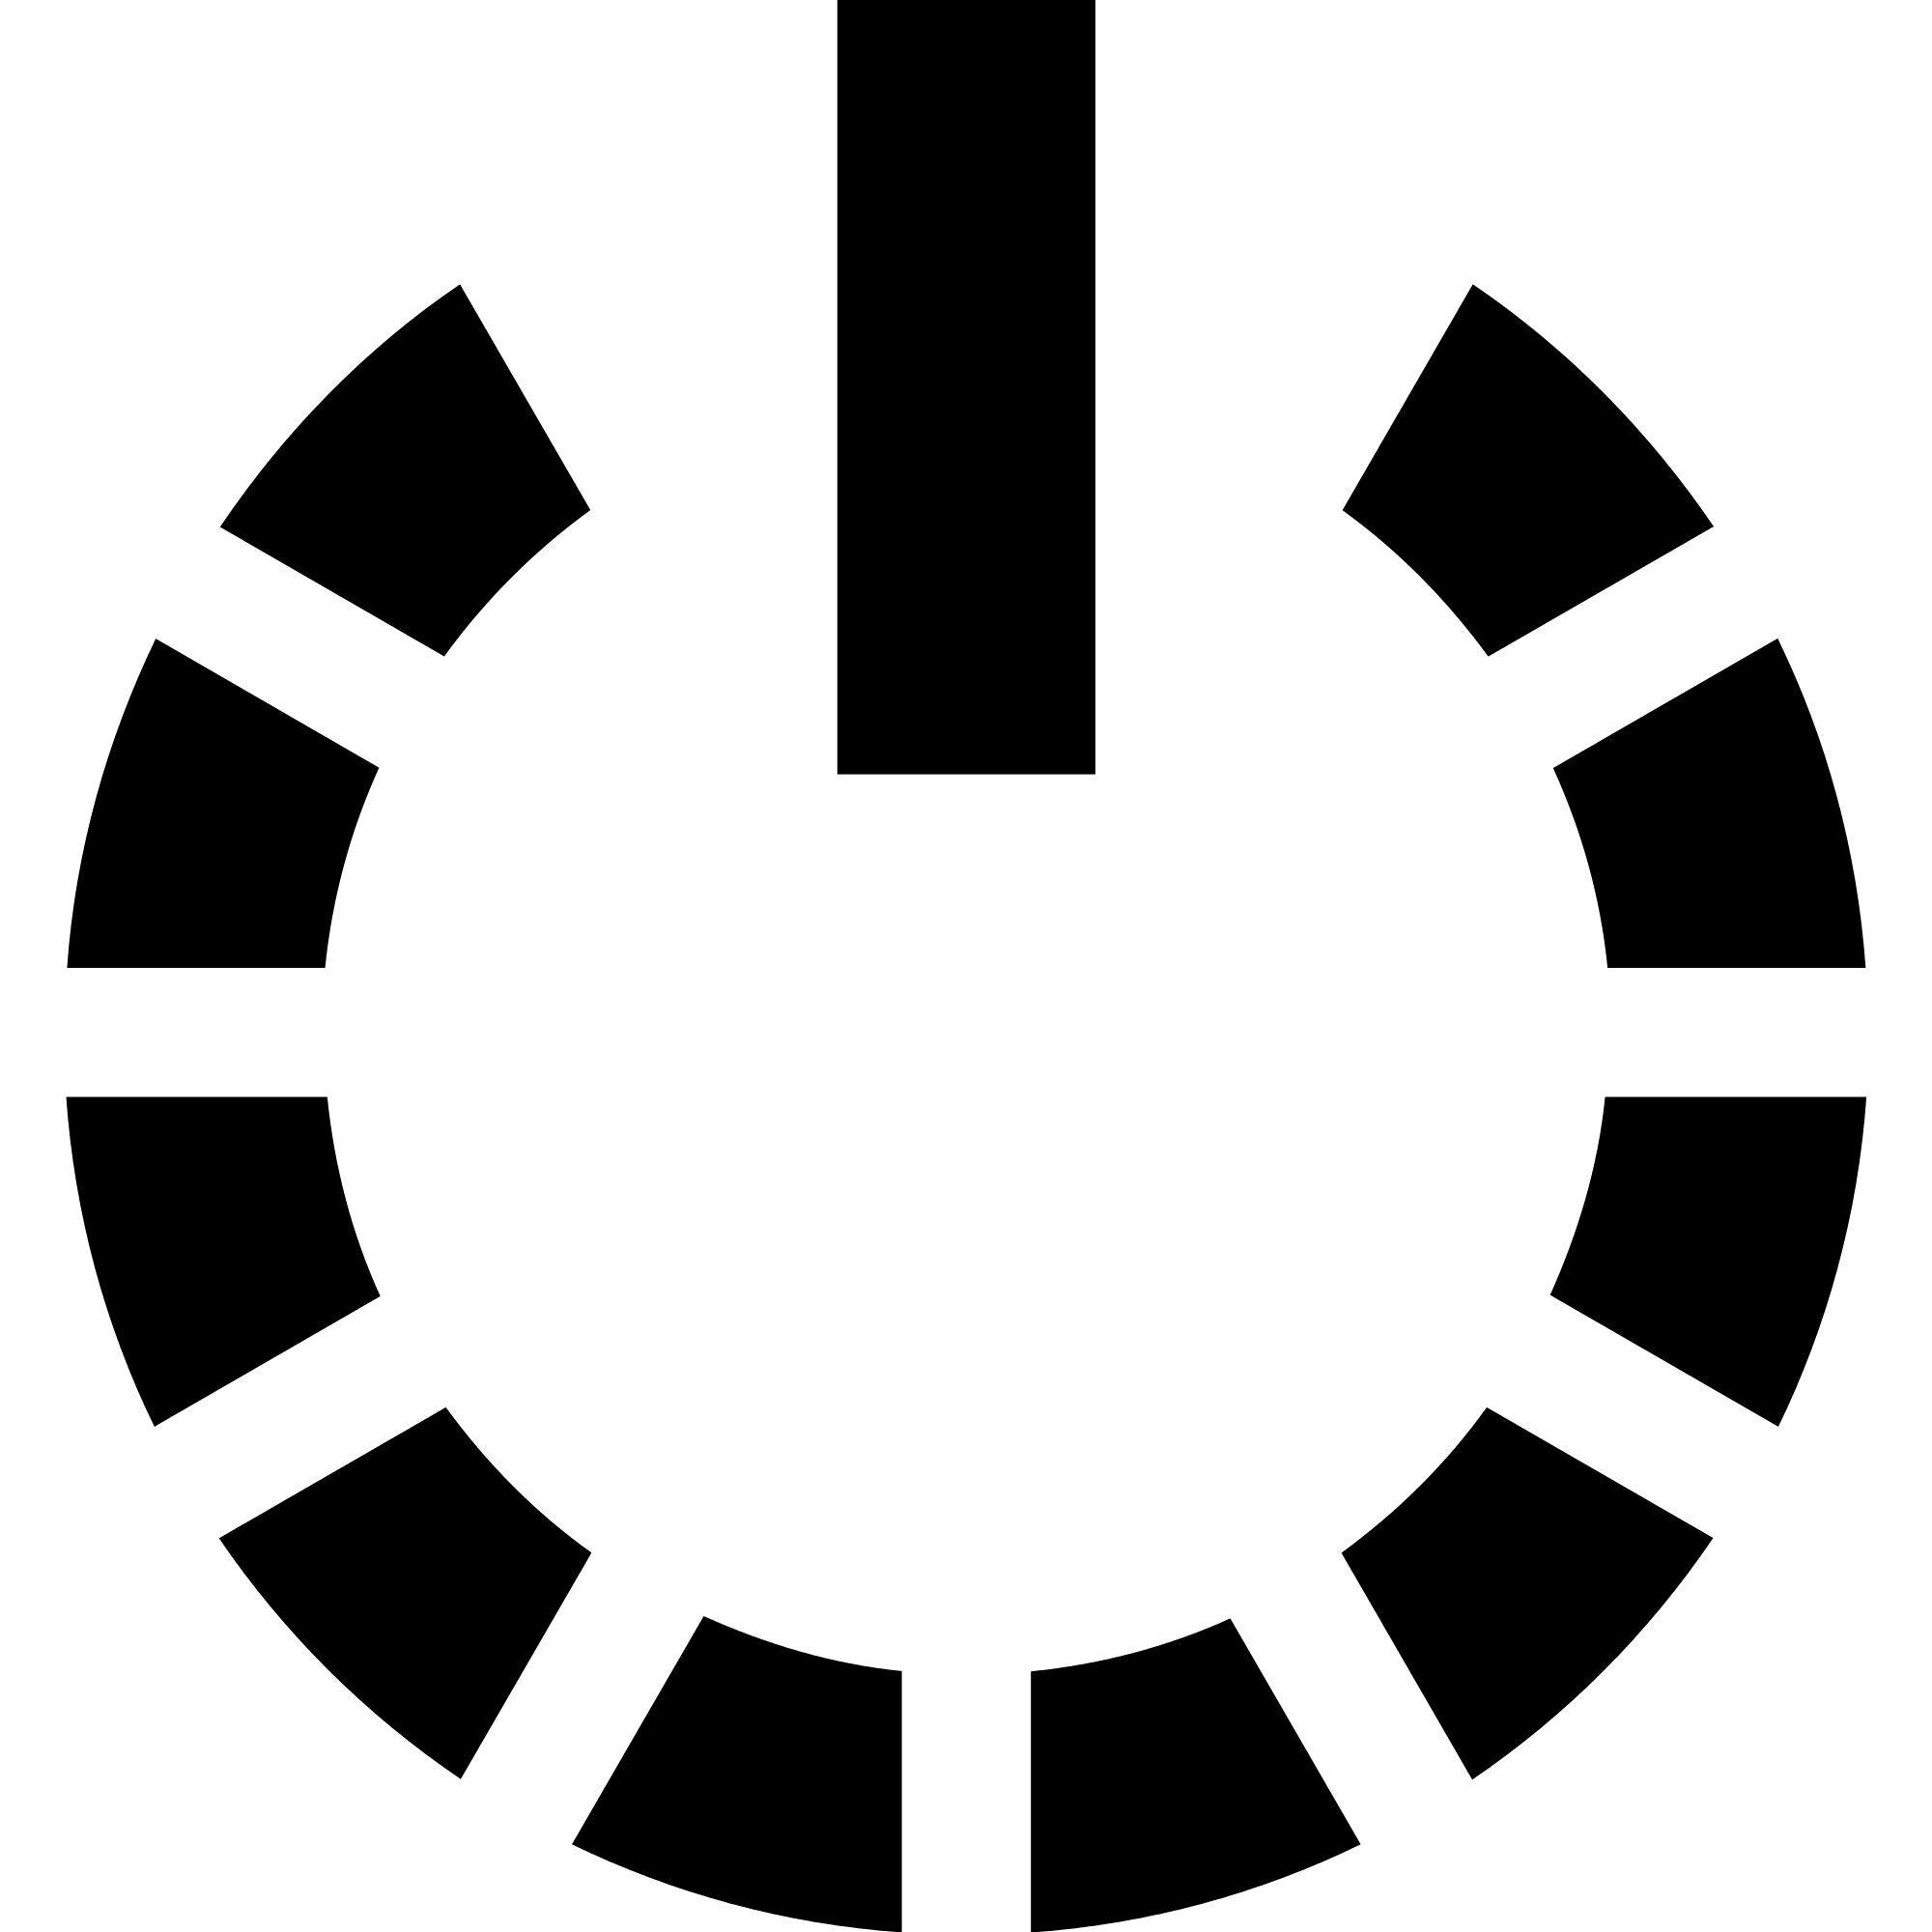 Broken Circle Logo - Simpleicons Interface Power Symbol With The Circle Of A Broken